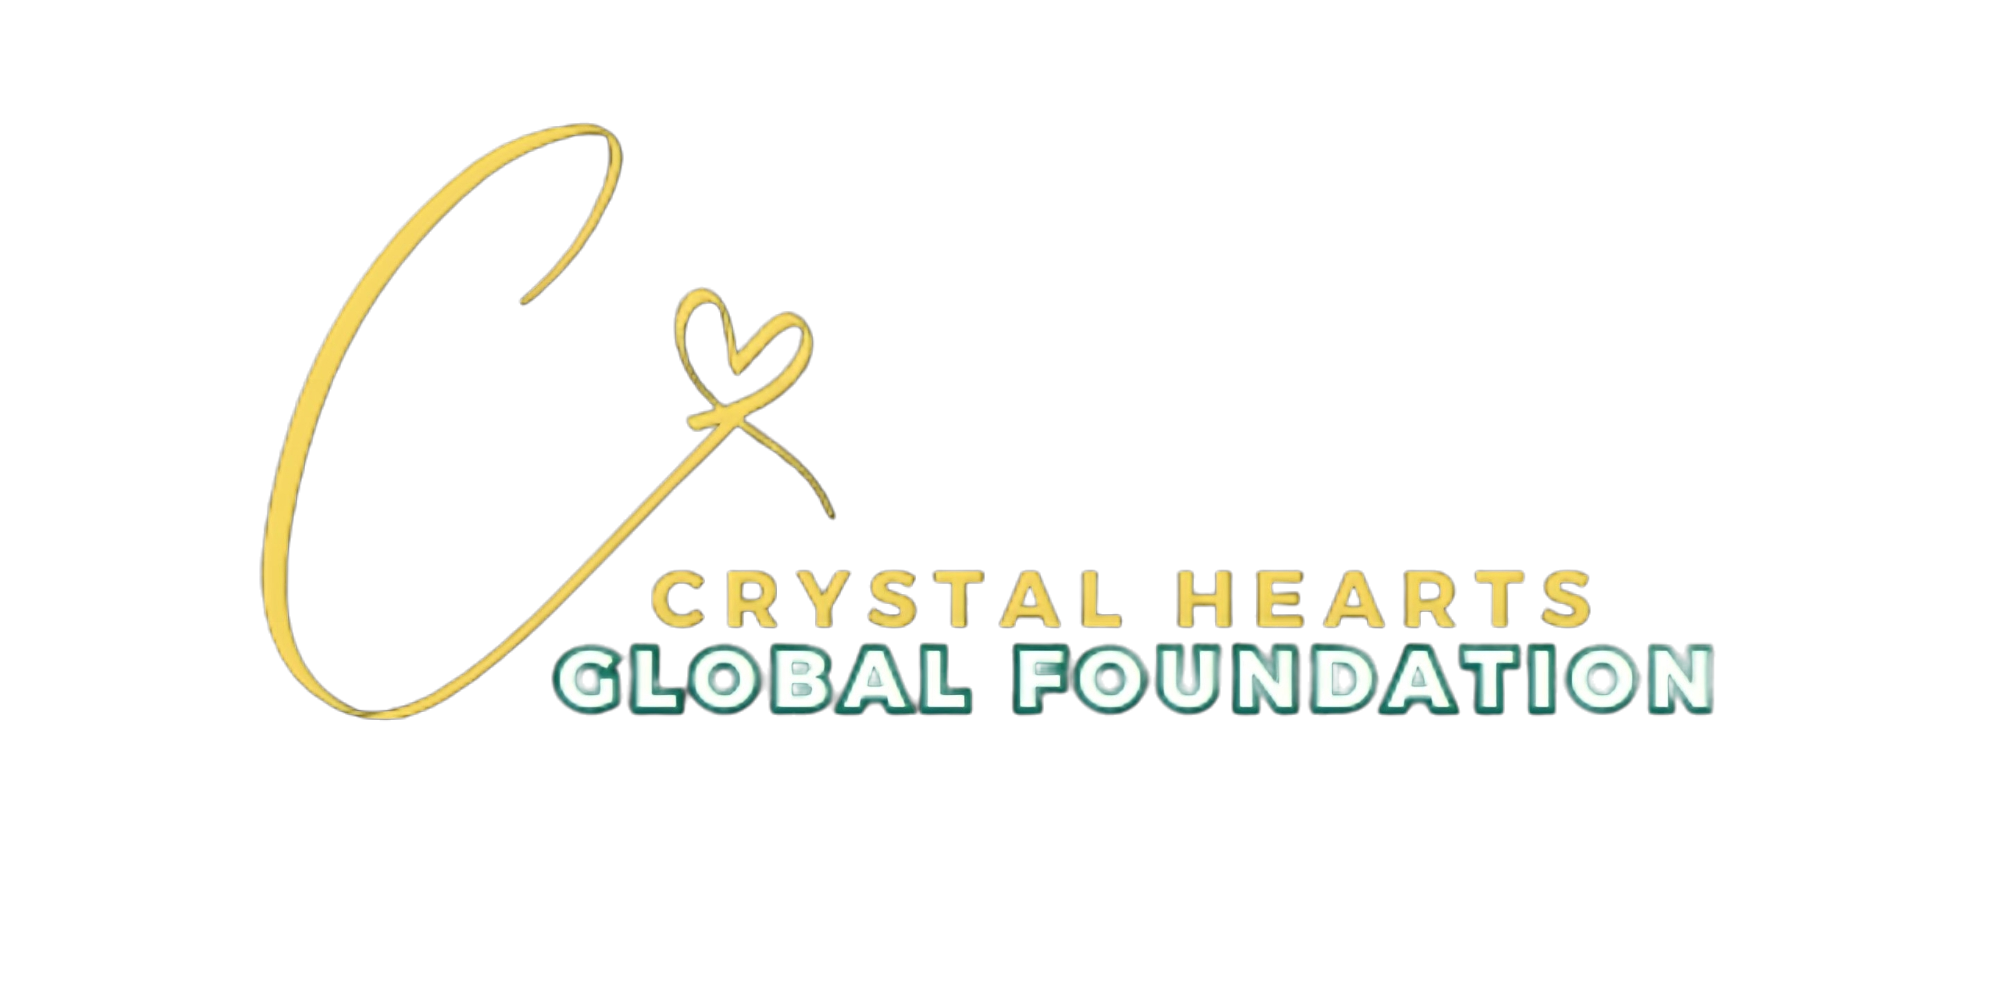 CRYSTAL HEARTS GLOBAL FOUNDATION